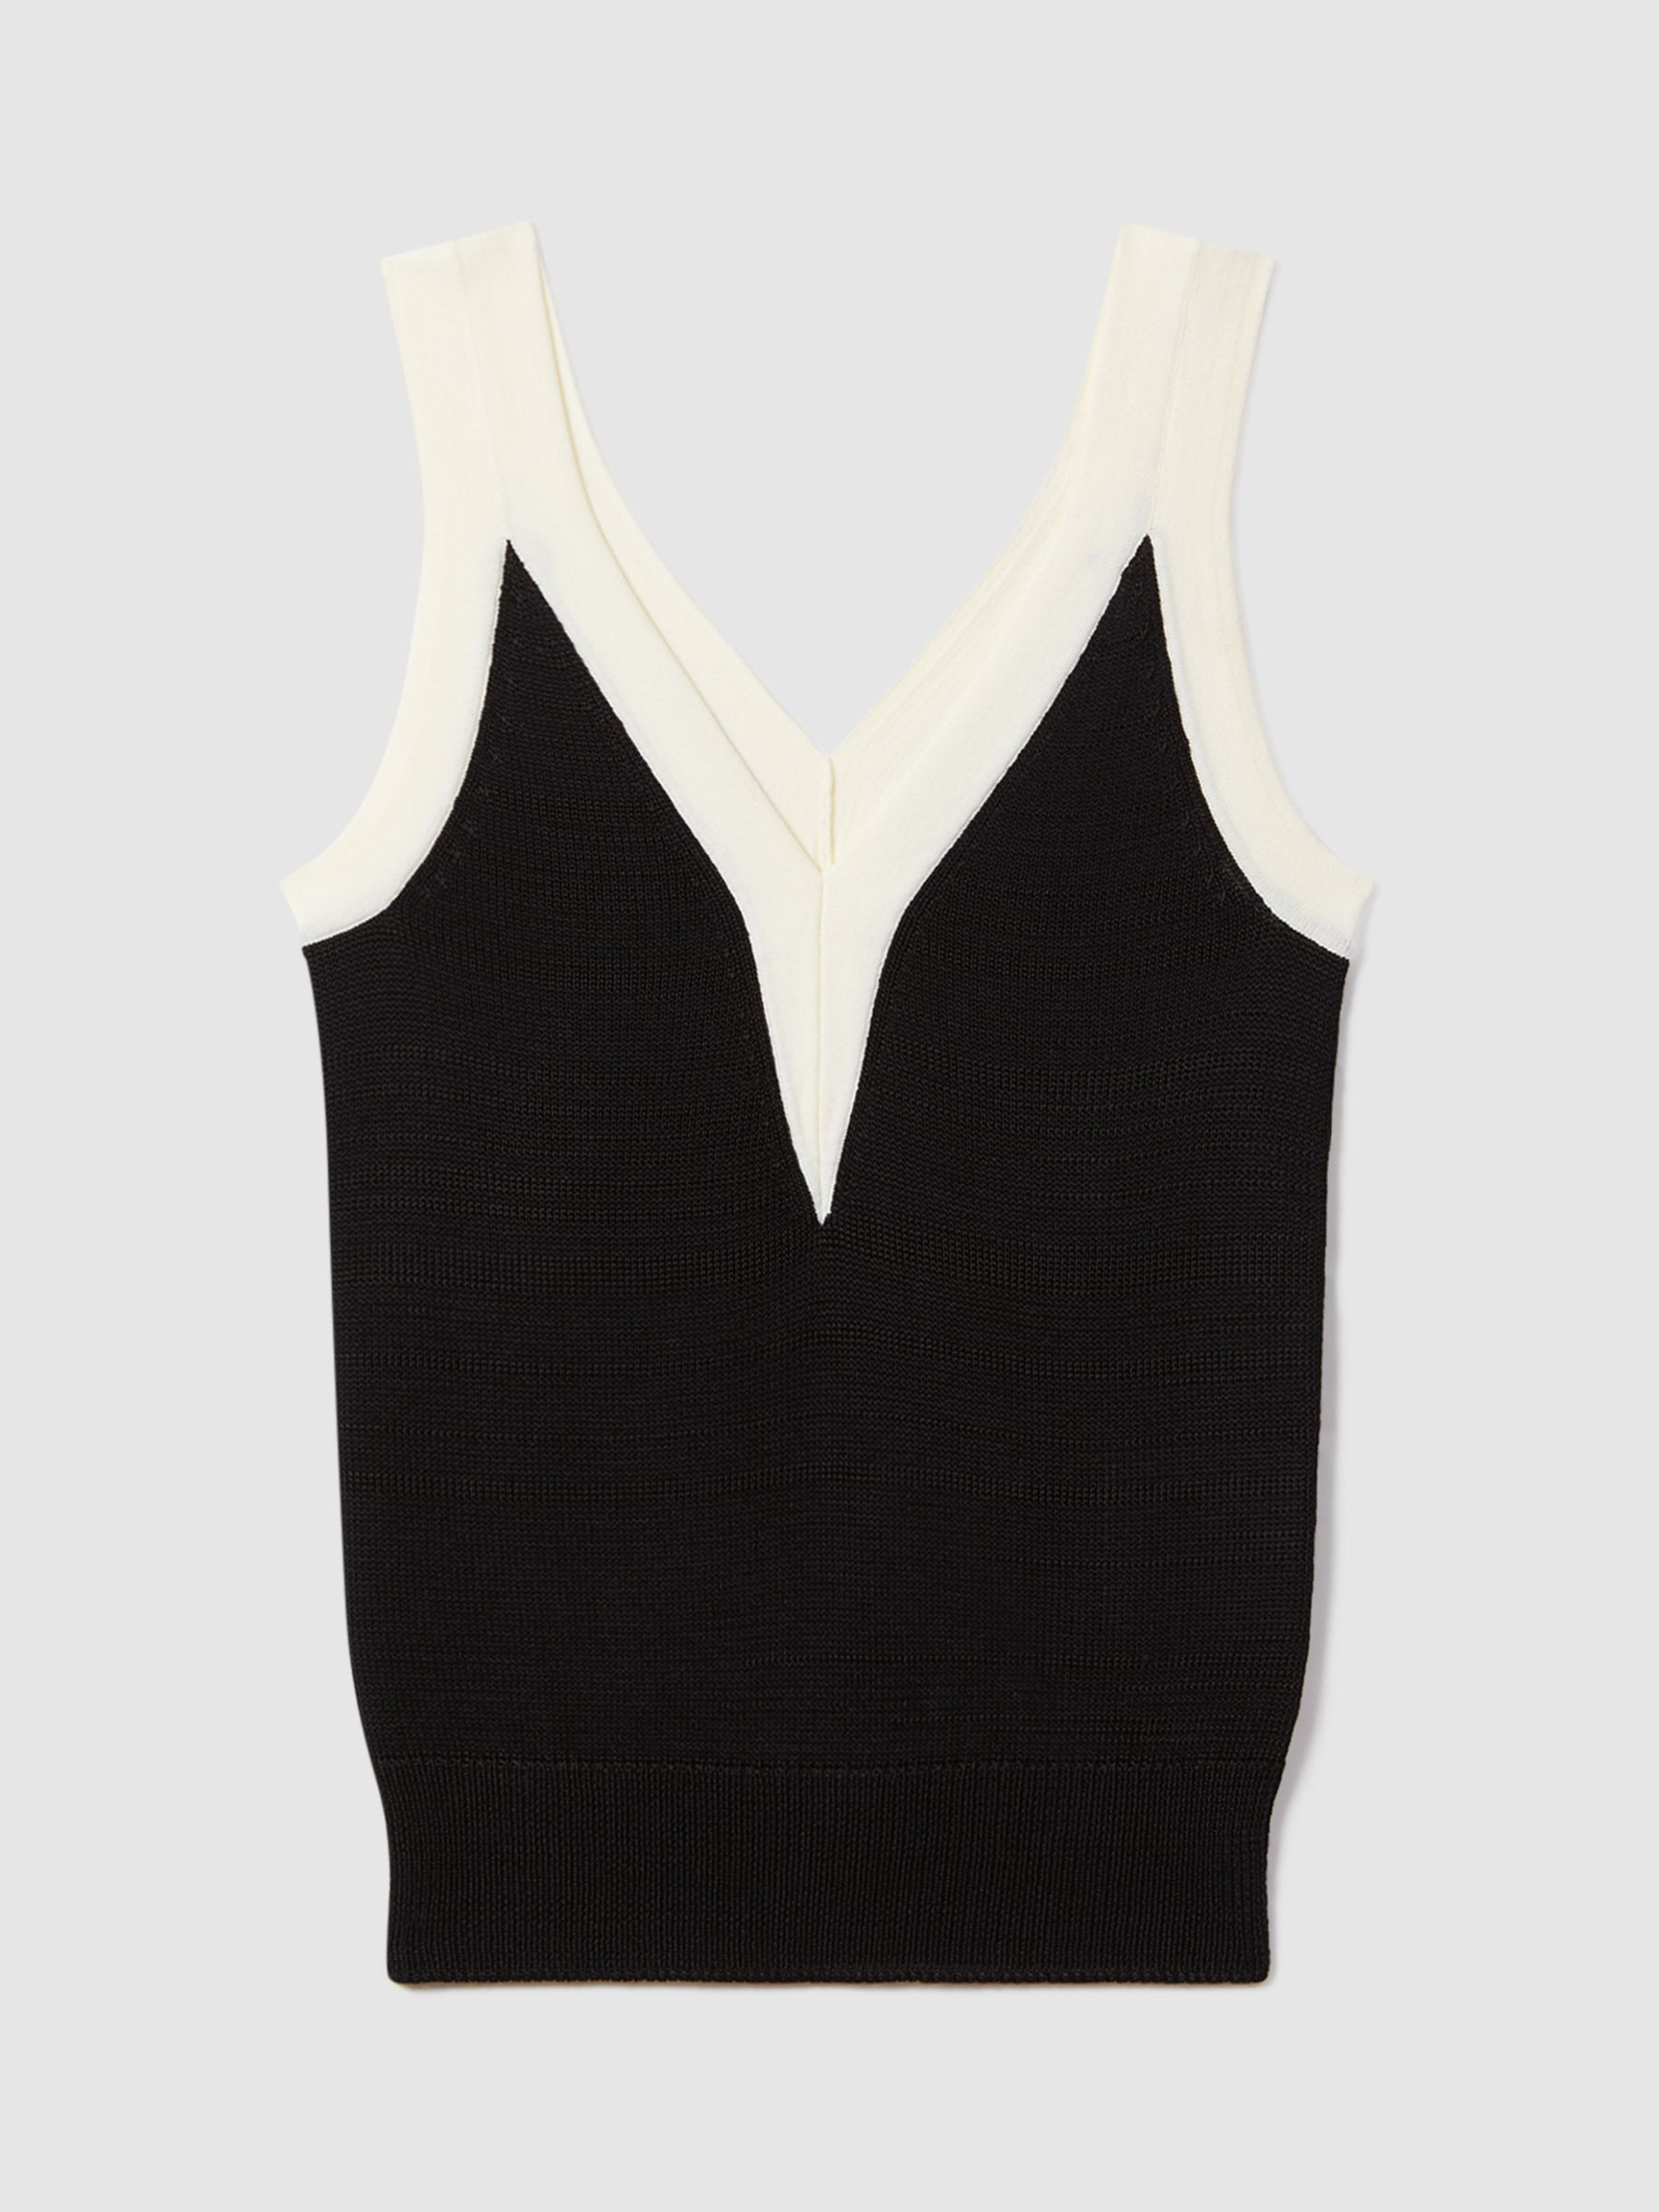 Reiss Tessa Colour Block V-Neck Vest Top, Black/White, XS